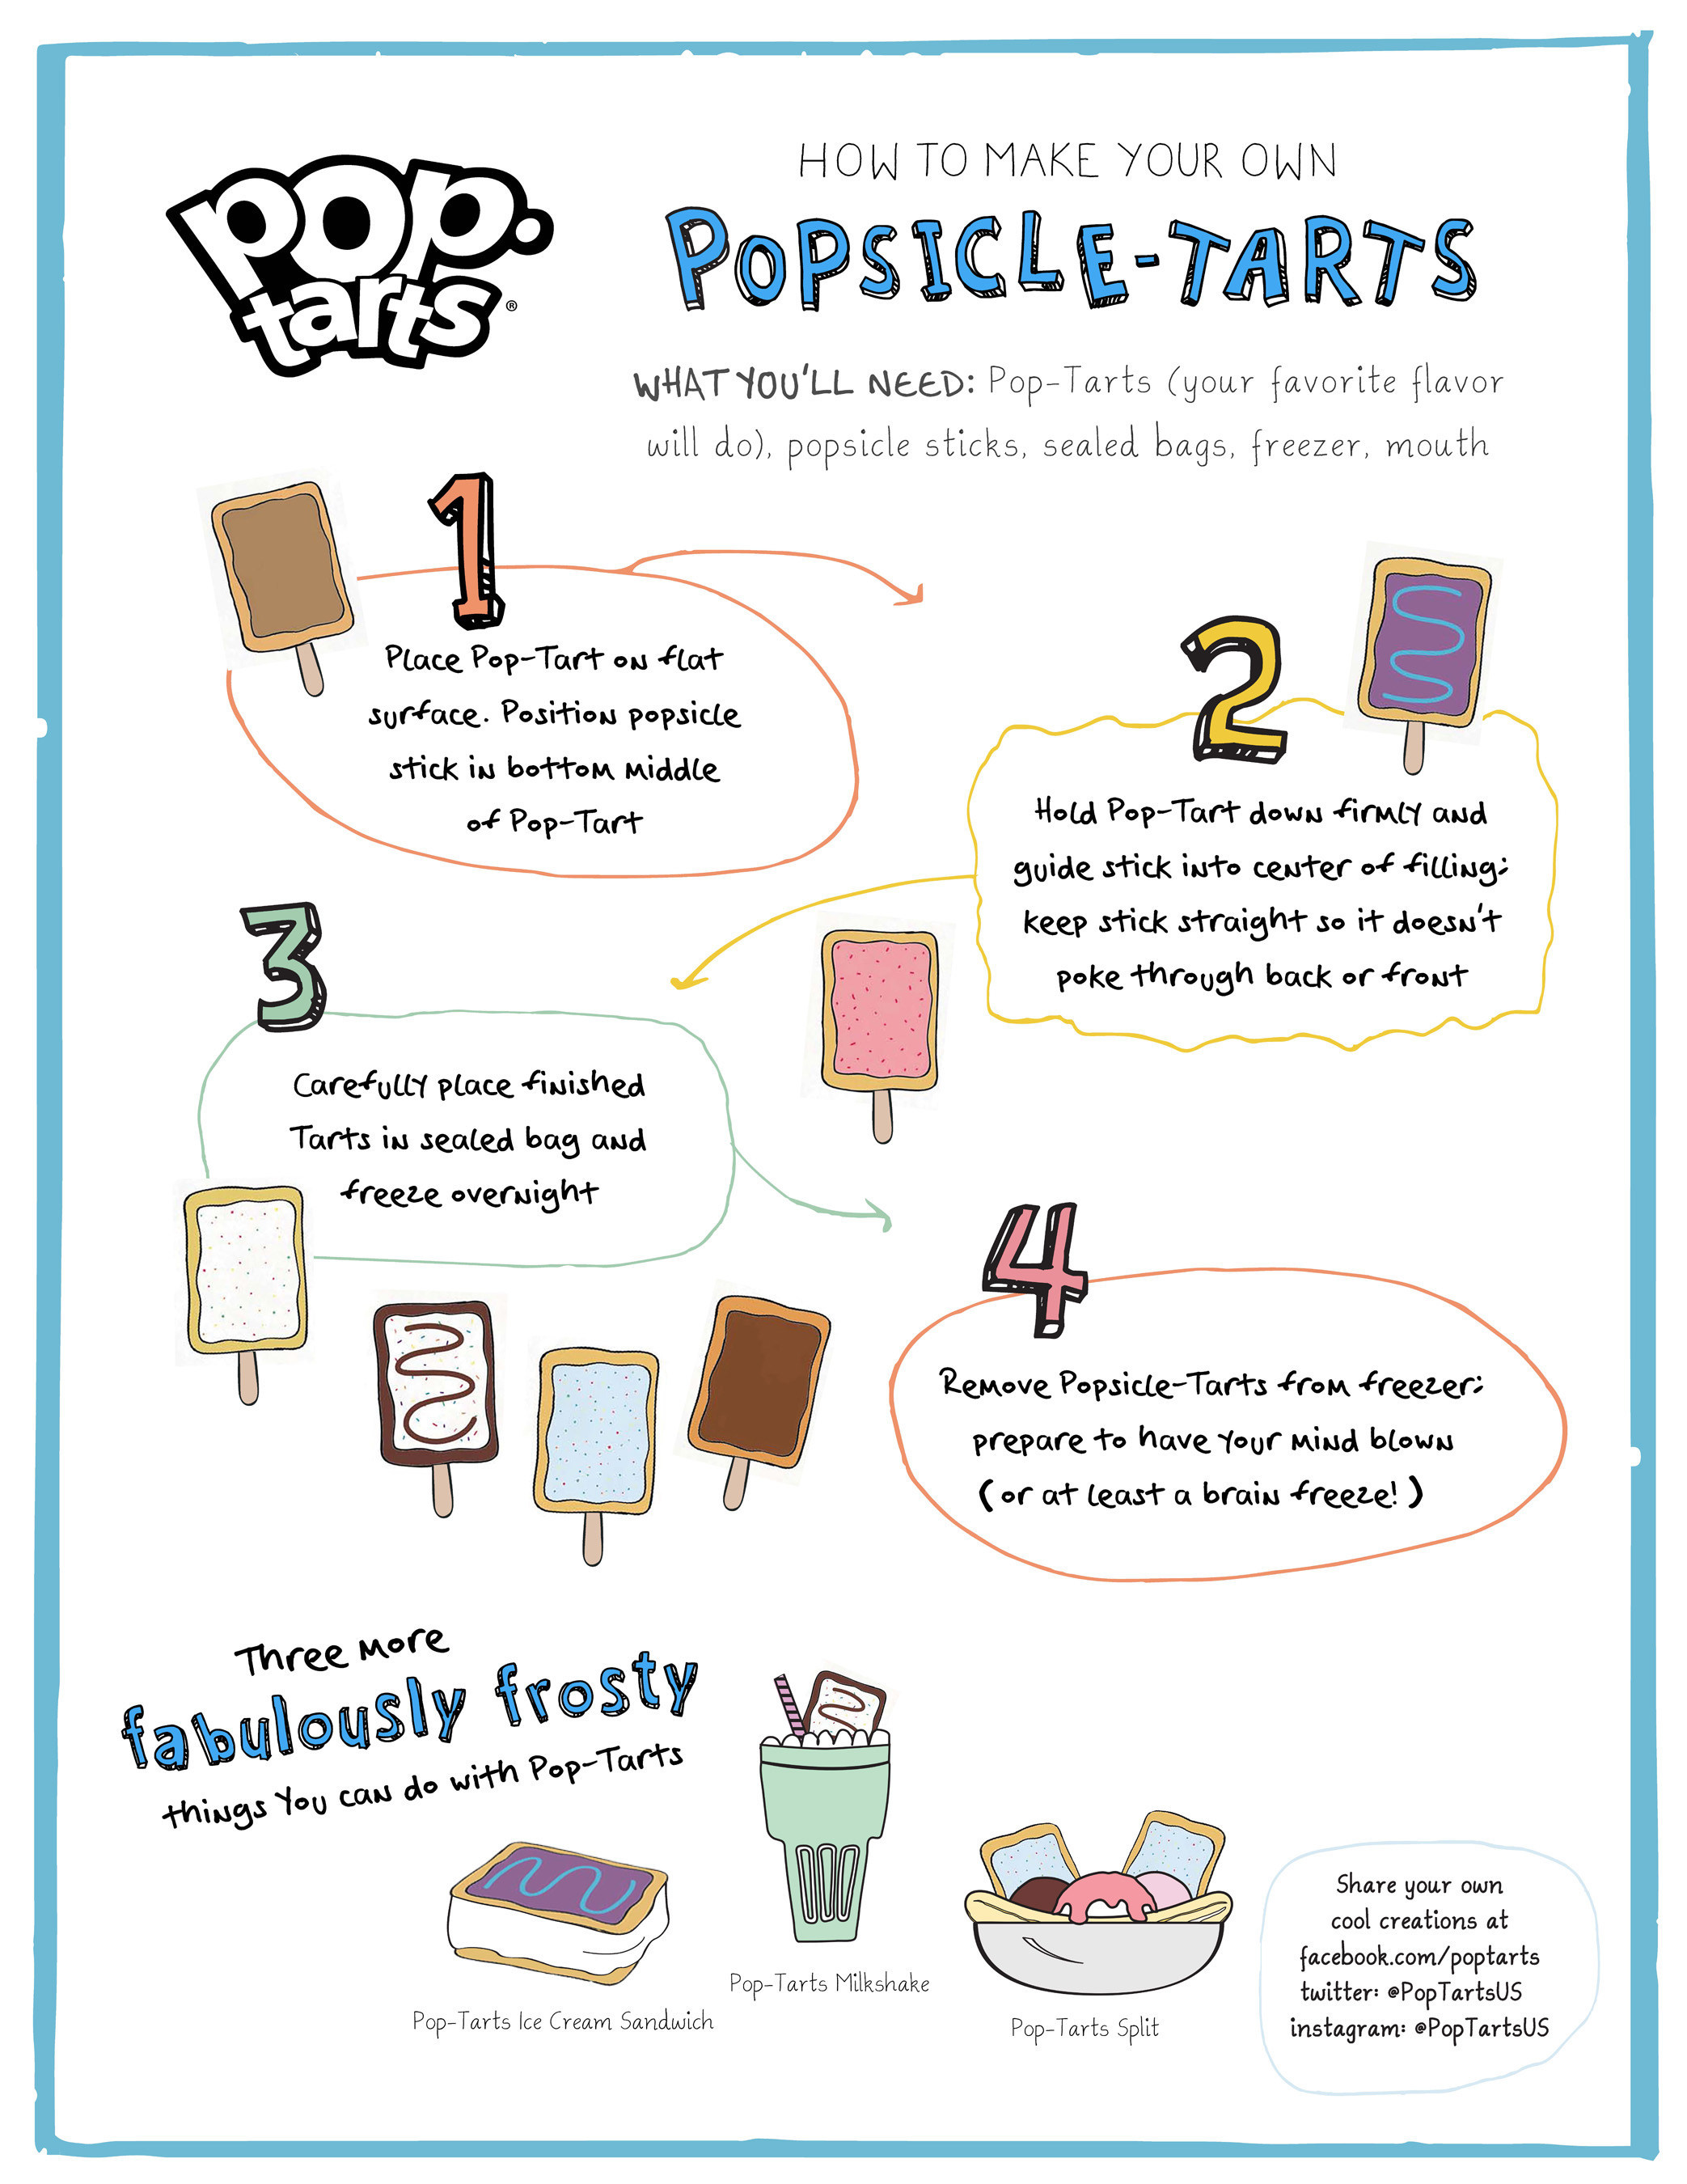 Pop-Tarts® Just Introducing Popsicle-Tarts - 30,